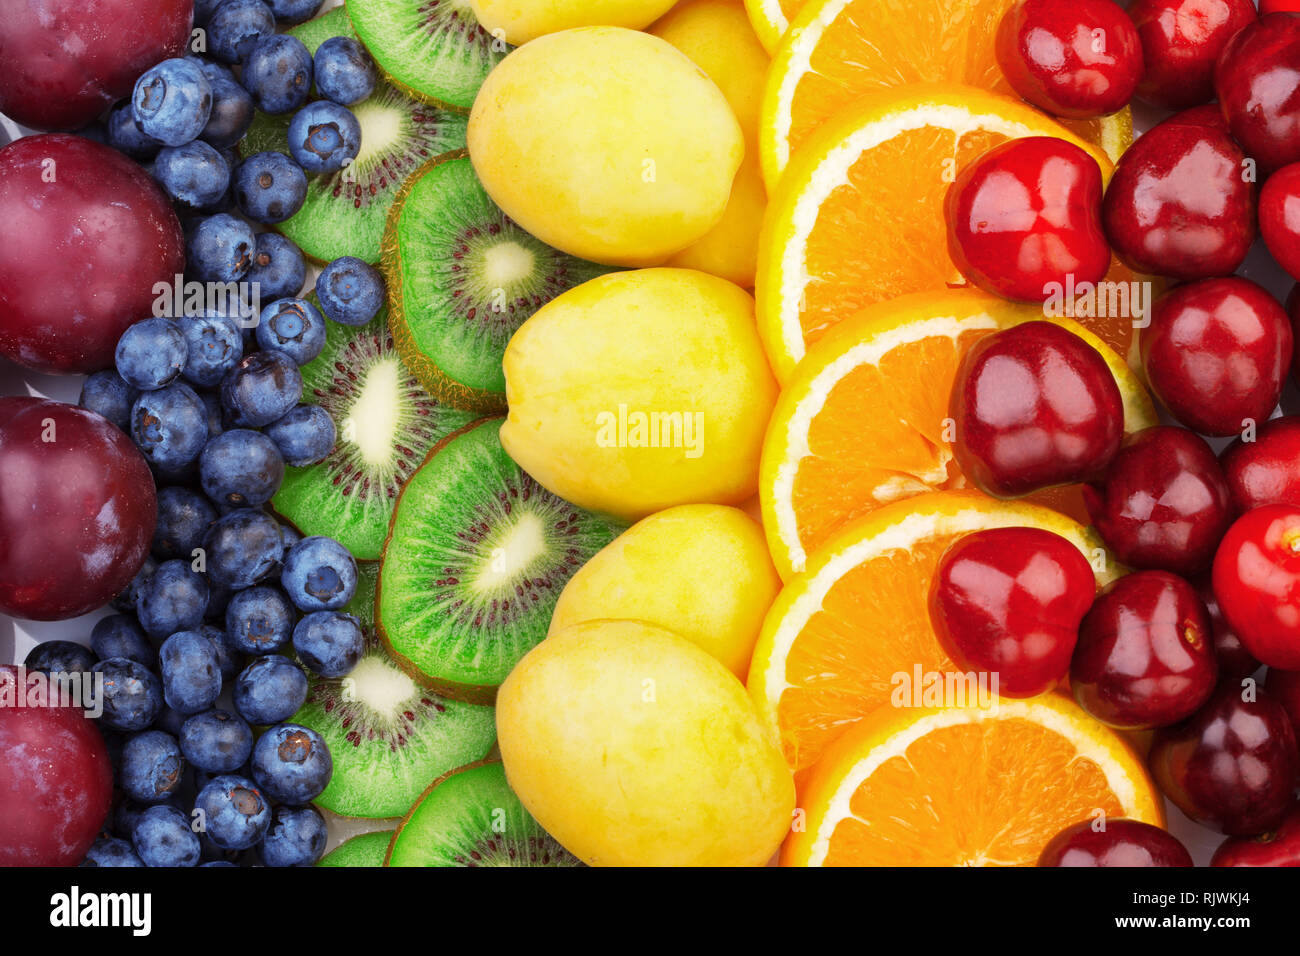 https://c8.alamy.com/comp/RJWKJ4/fresh-fruitsassorted-fruits-colorful-background-color-range-RJWKJ4.jpg